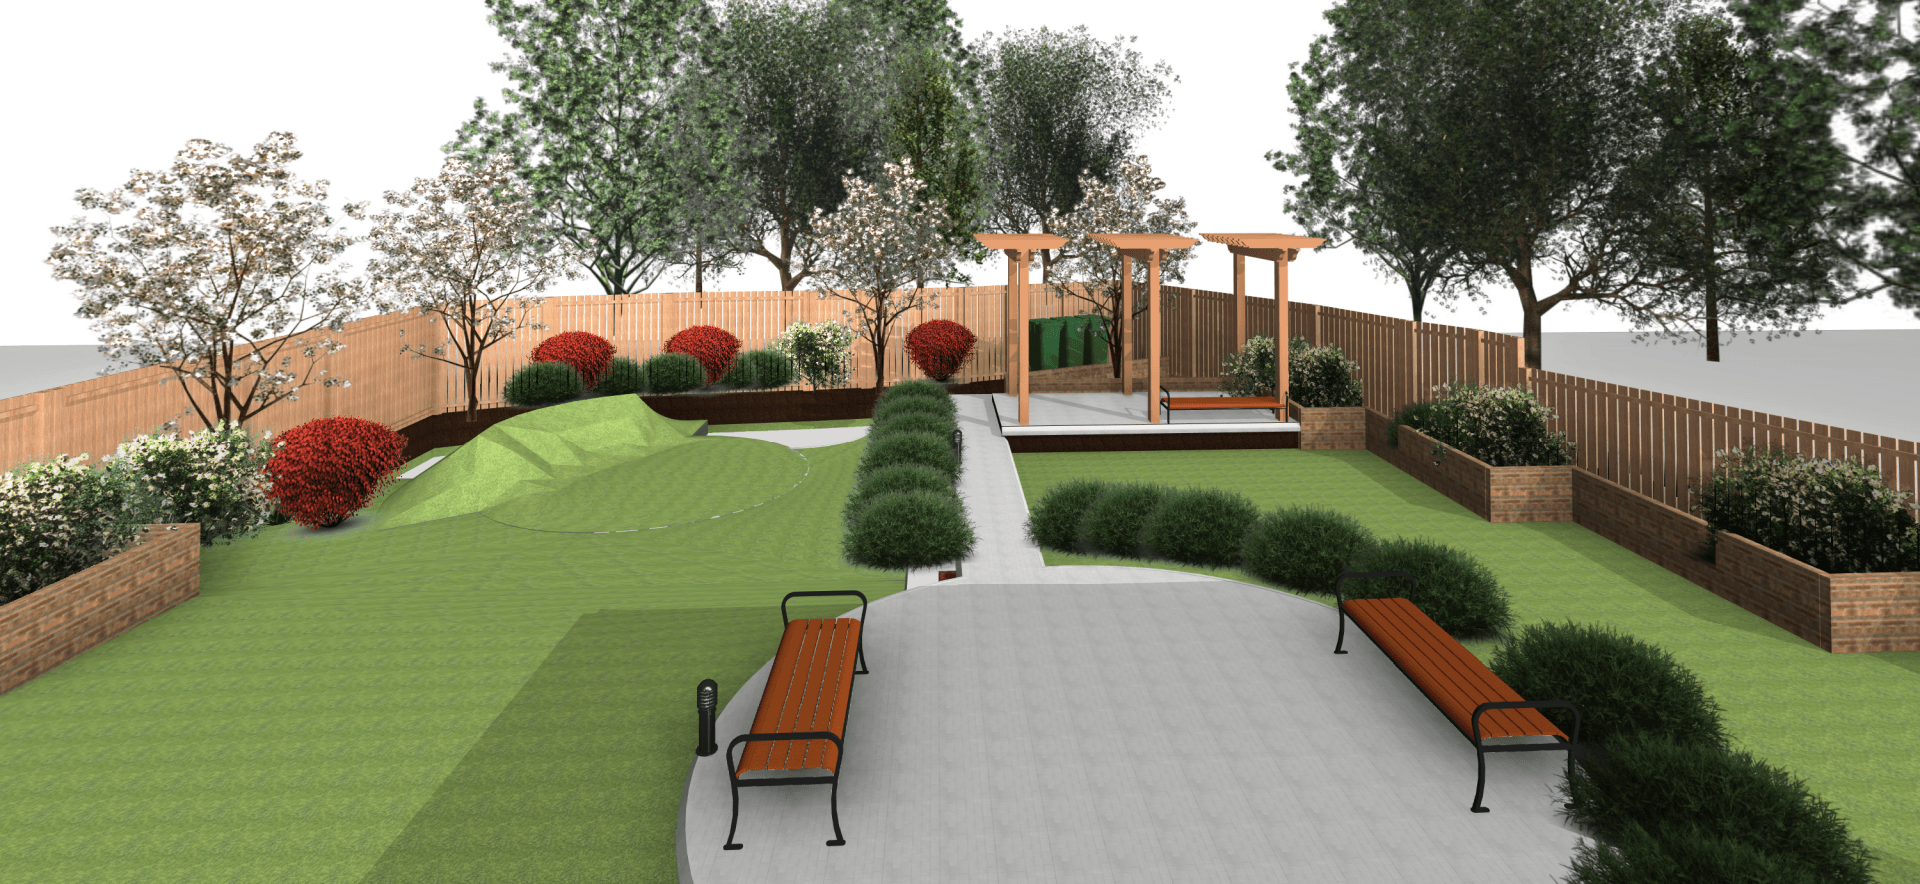 New build developmet and landscape design in Croydon